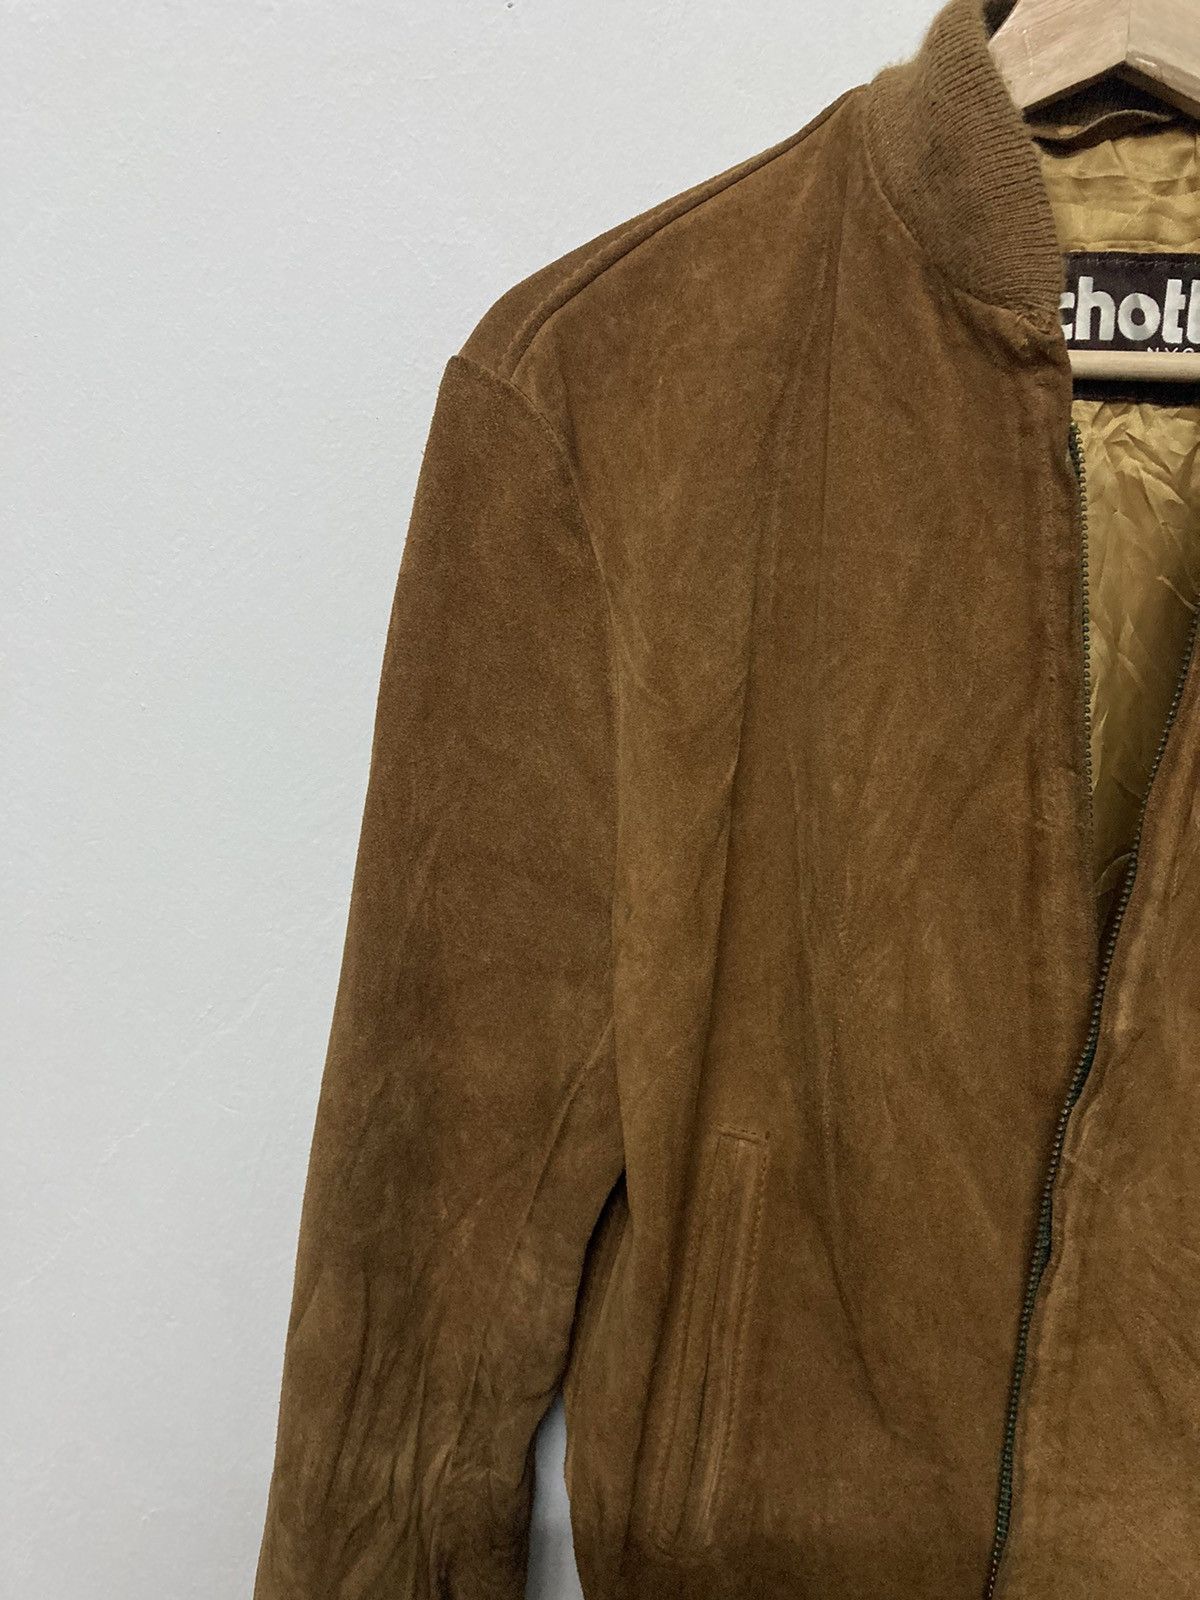 Vintage Schott Suede Full Leather Jacket - 7